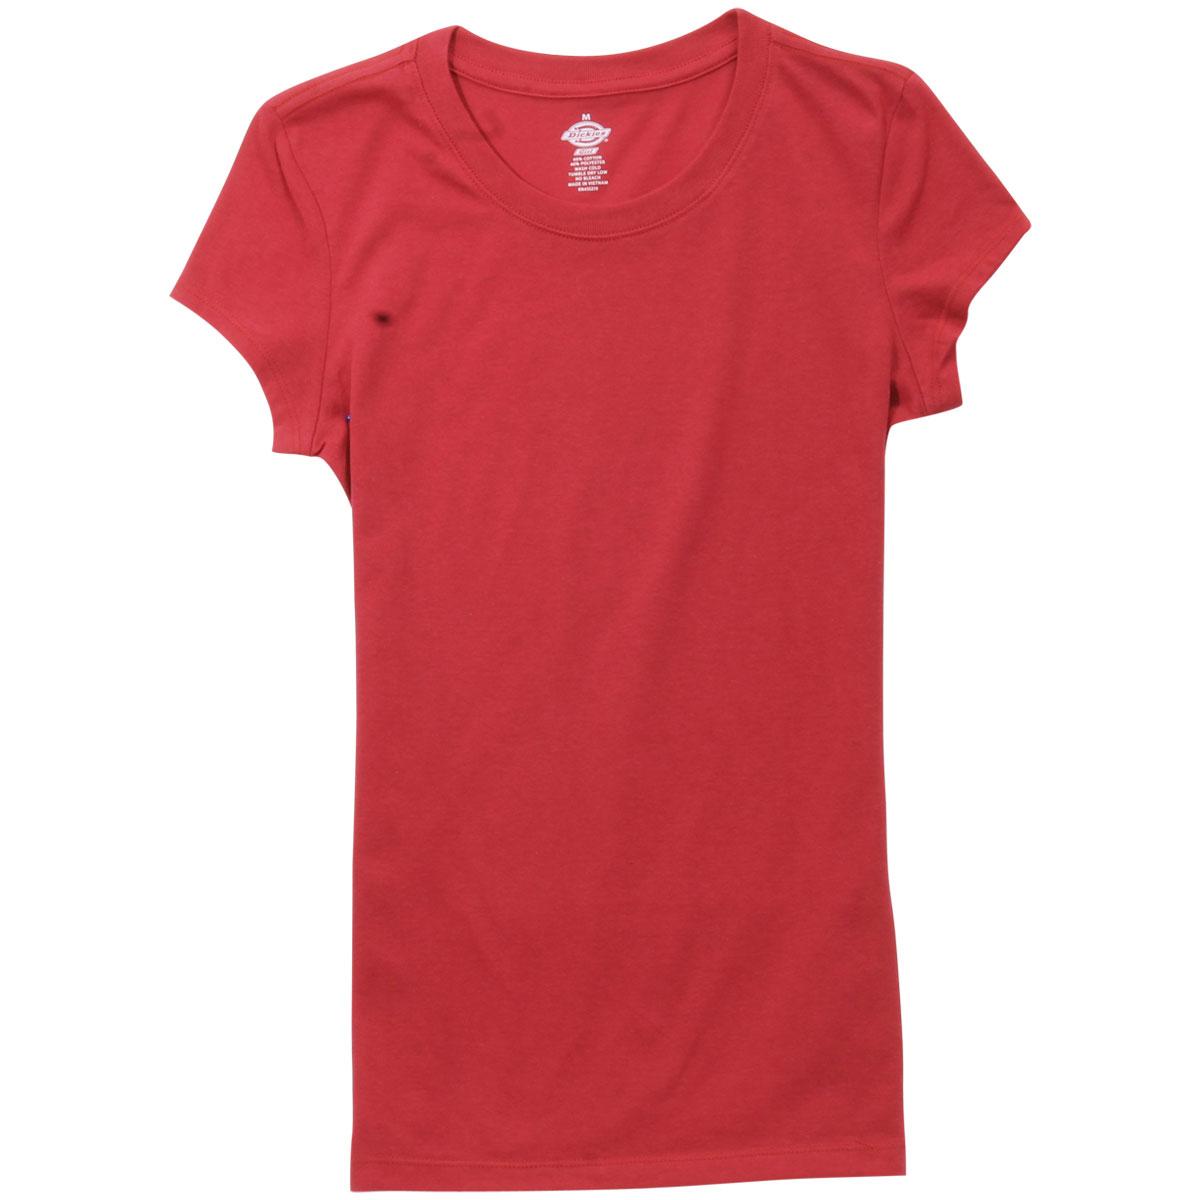 Dickies Girl Junior's Slim Fit Short Sleeve Crew Neck T Shirt - Red - Large